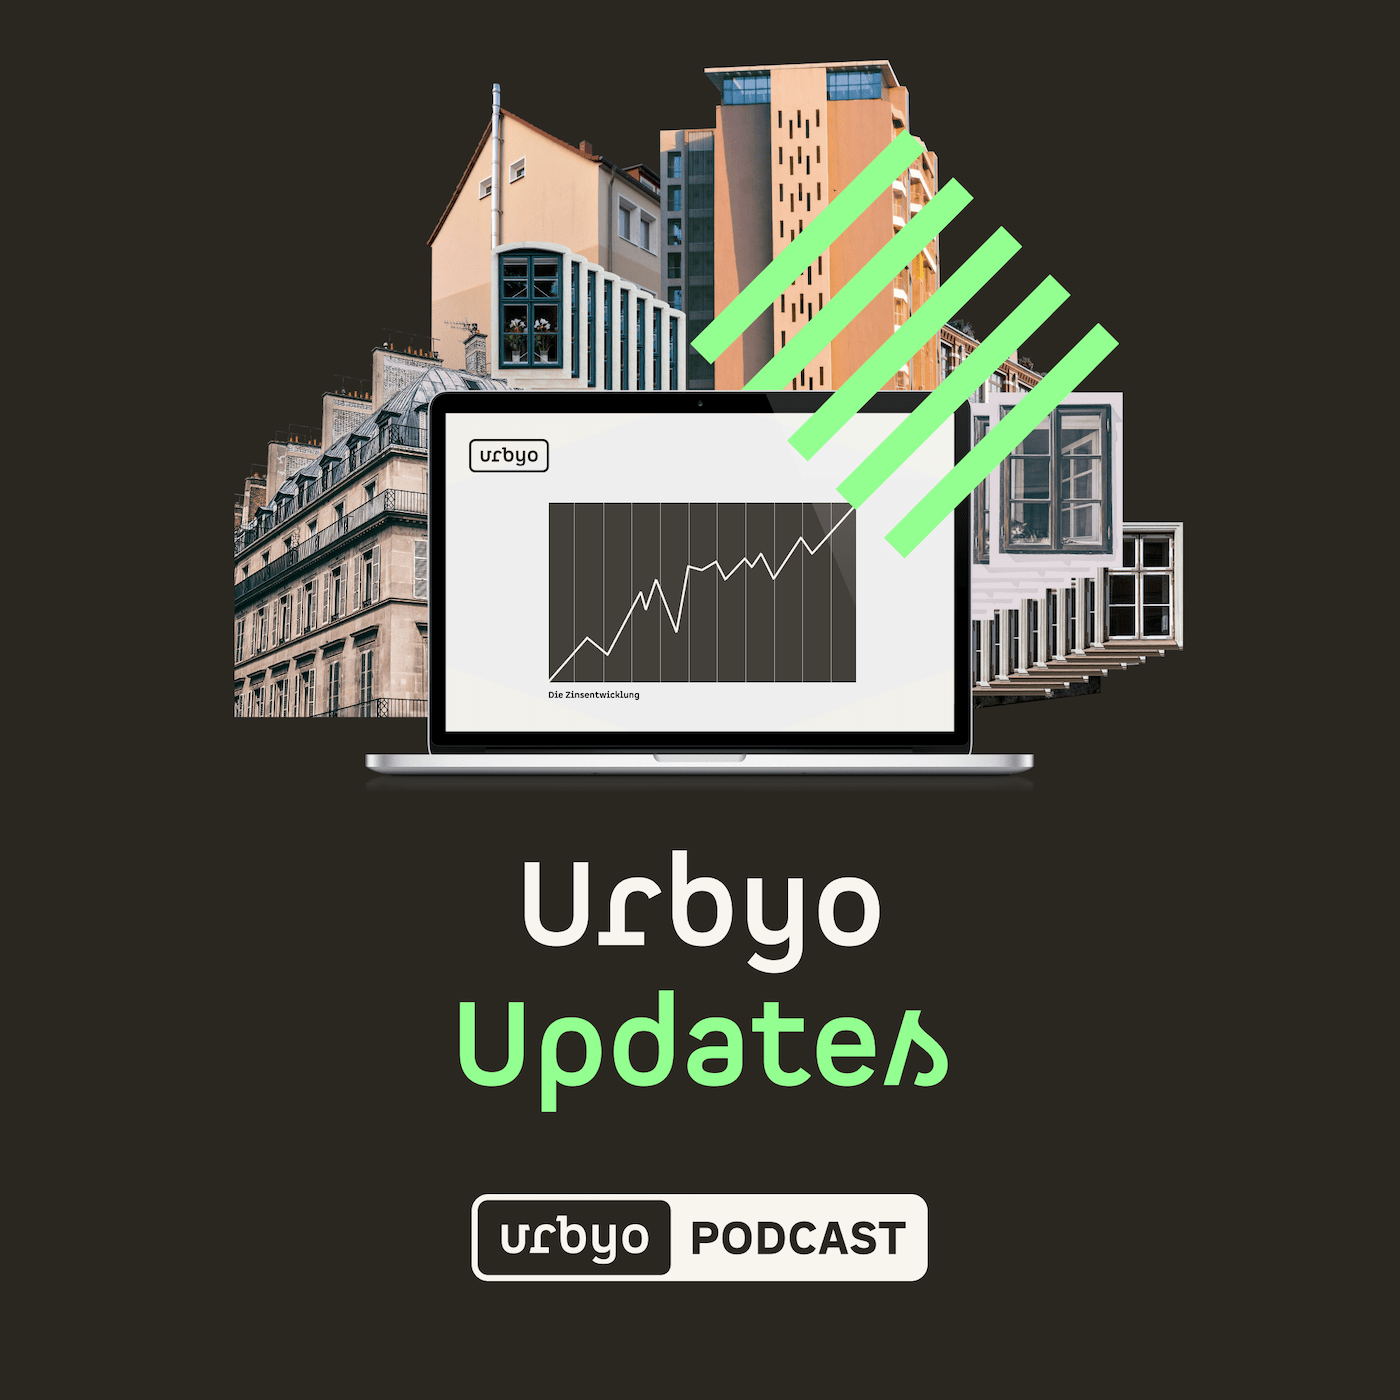 Urbyo Updates